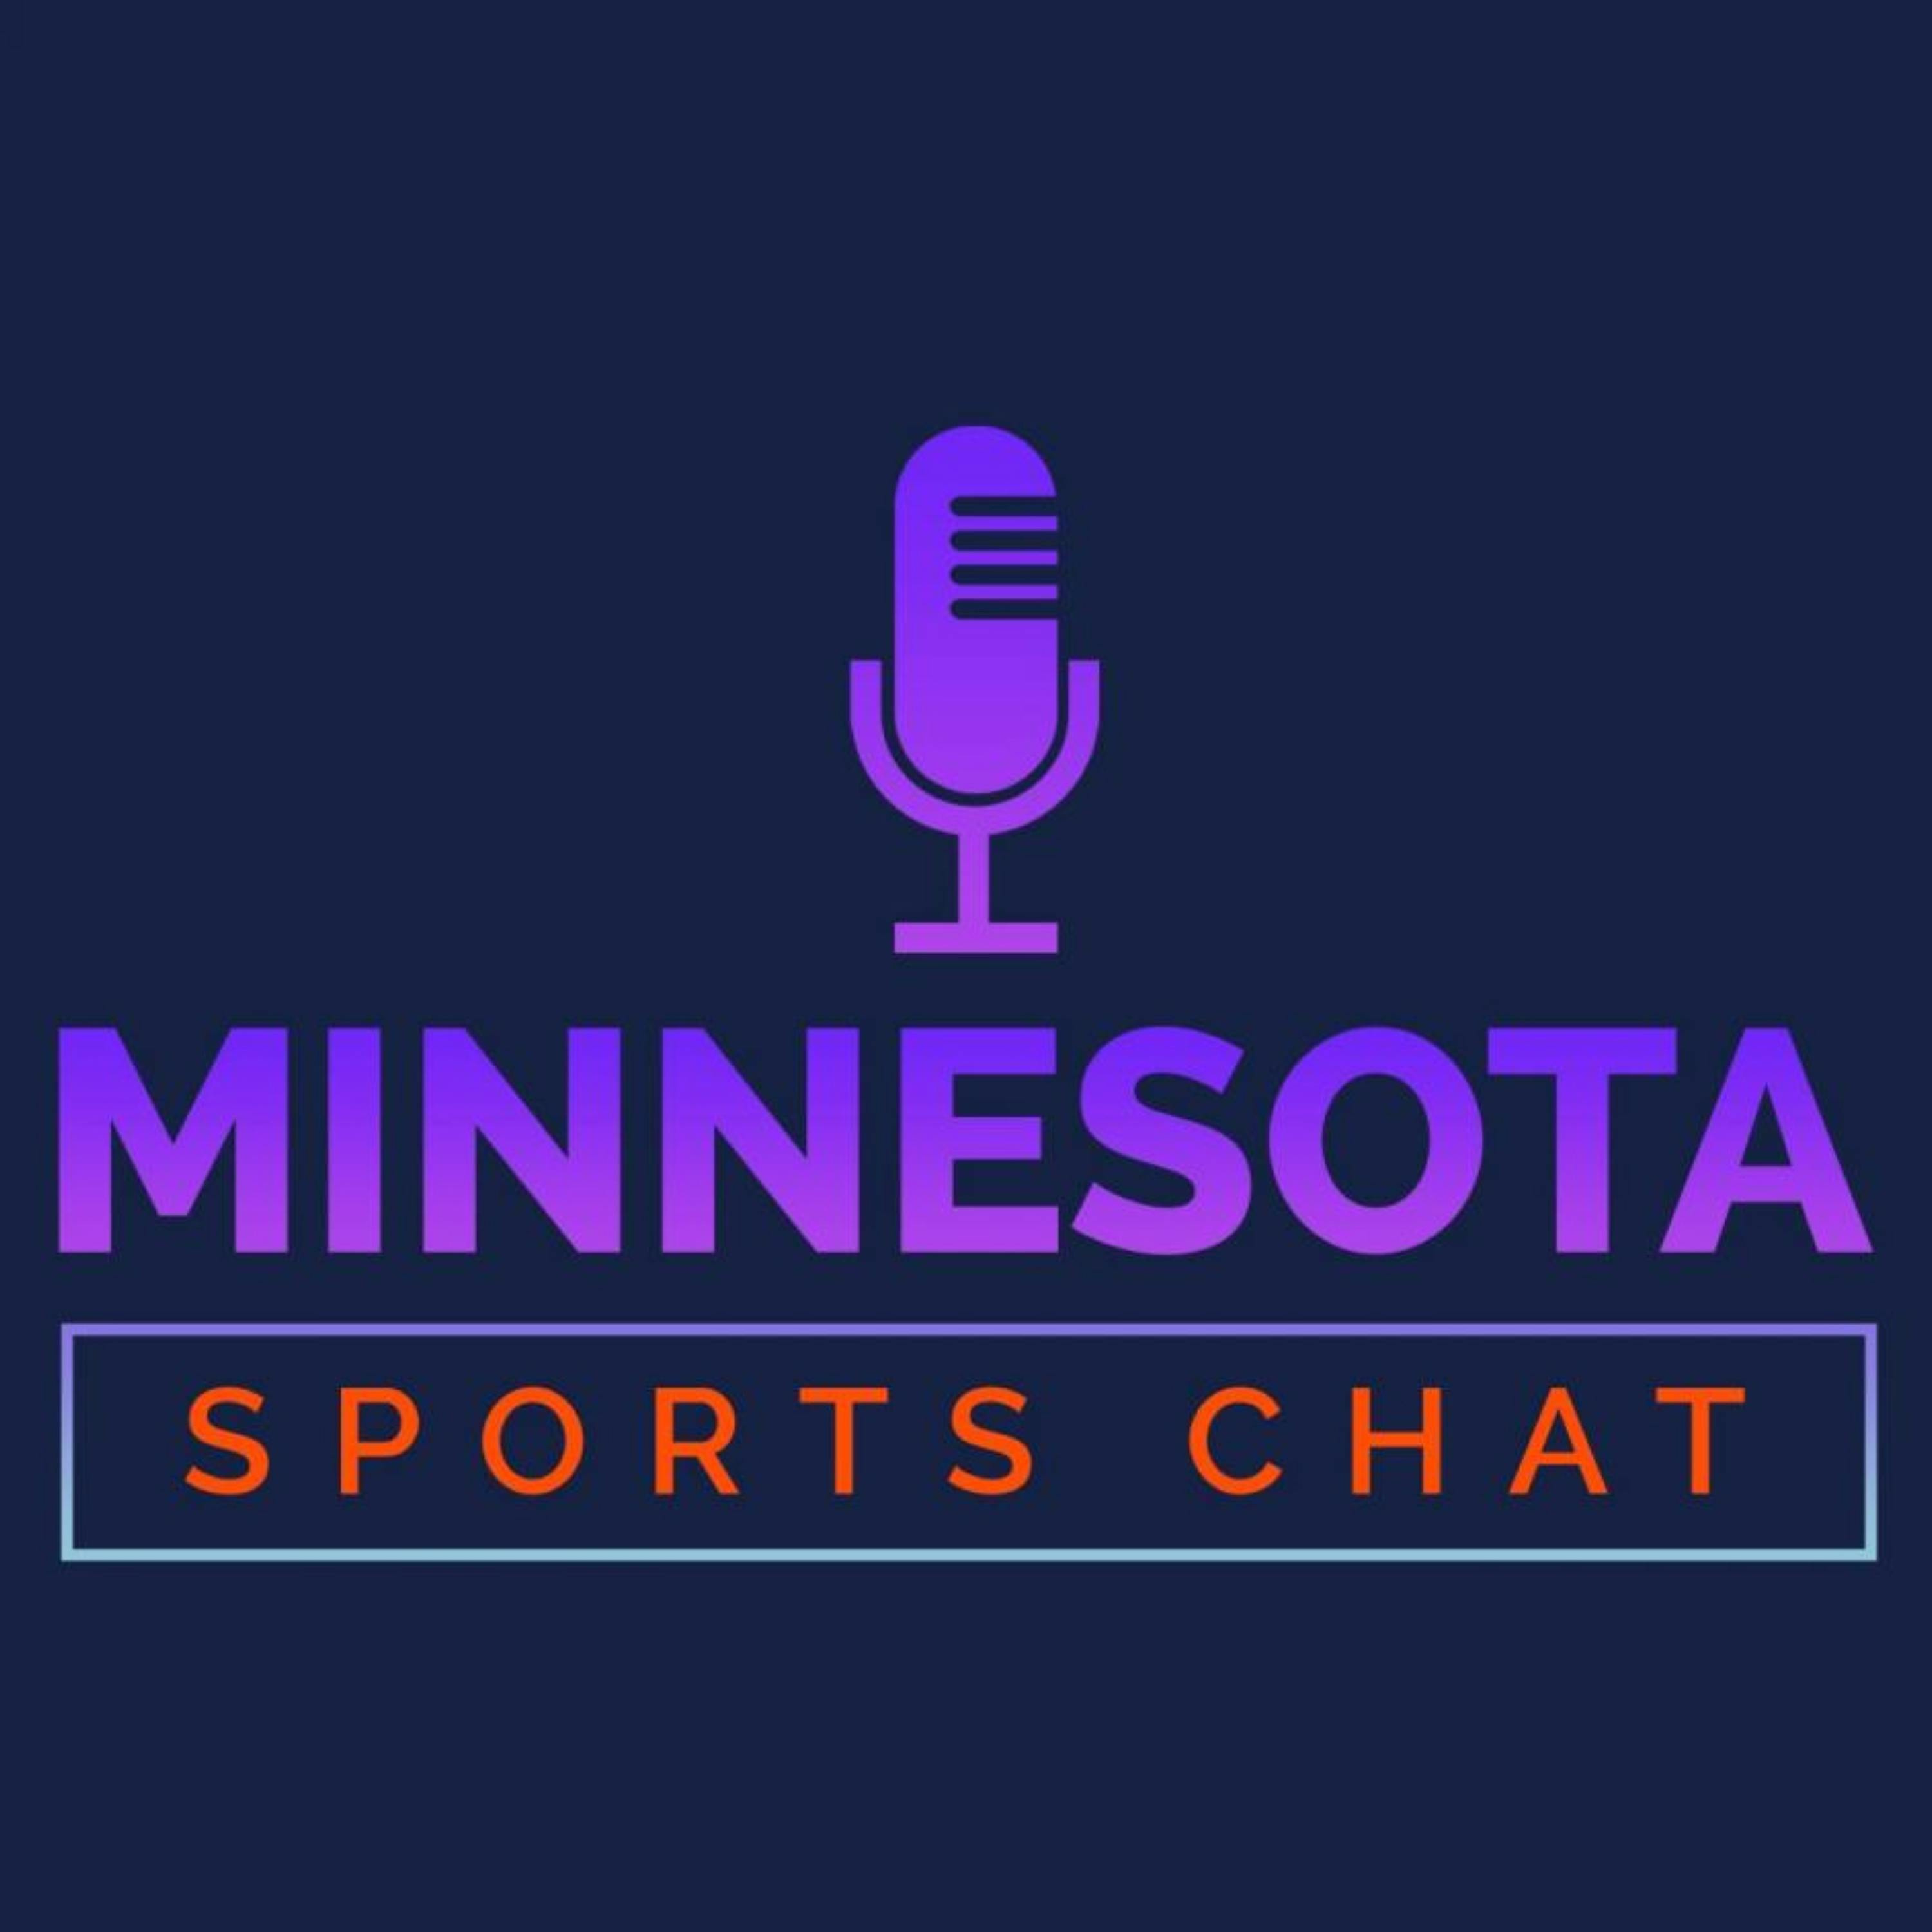 MINNESOTA SPORTS CHAT: Are YOU upset about Minnesota Vikings offseason? - Edition #159